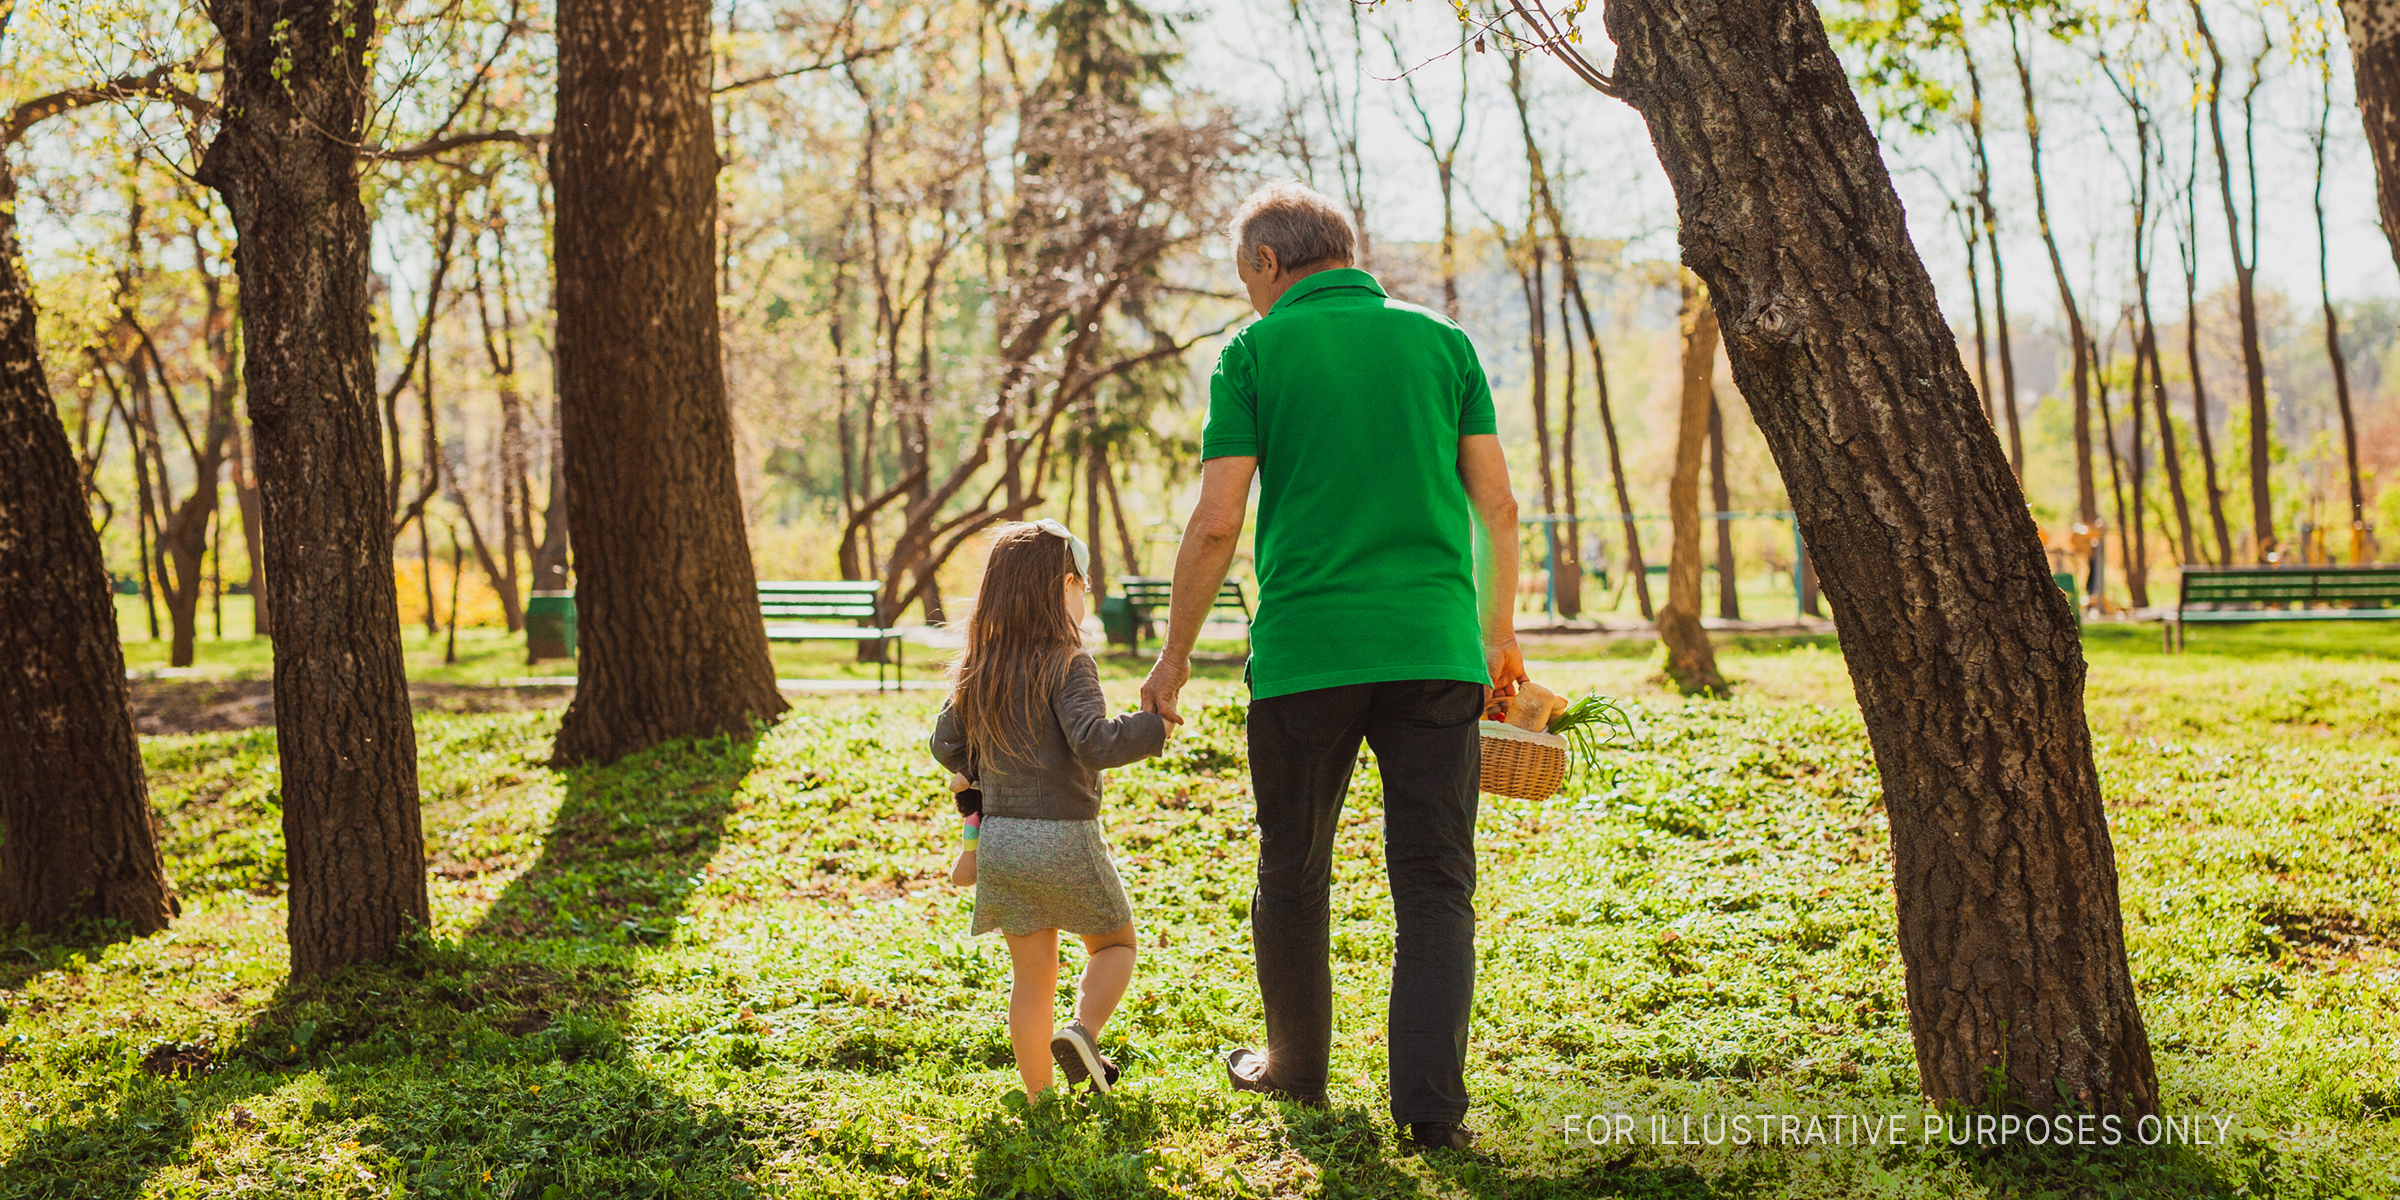 Man Walking With A Little Girl. | Source: Shutterstock